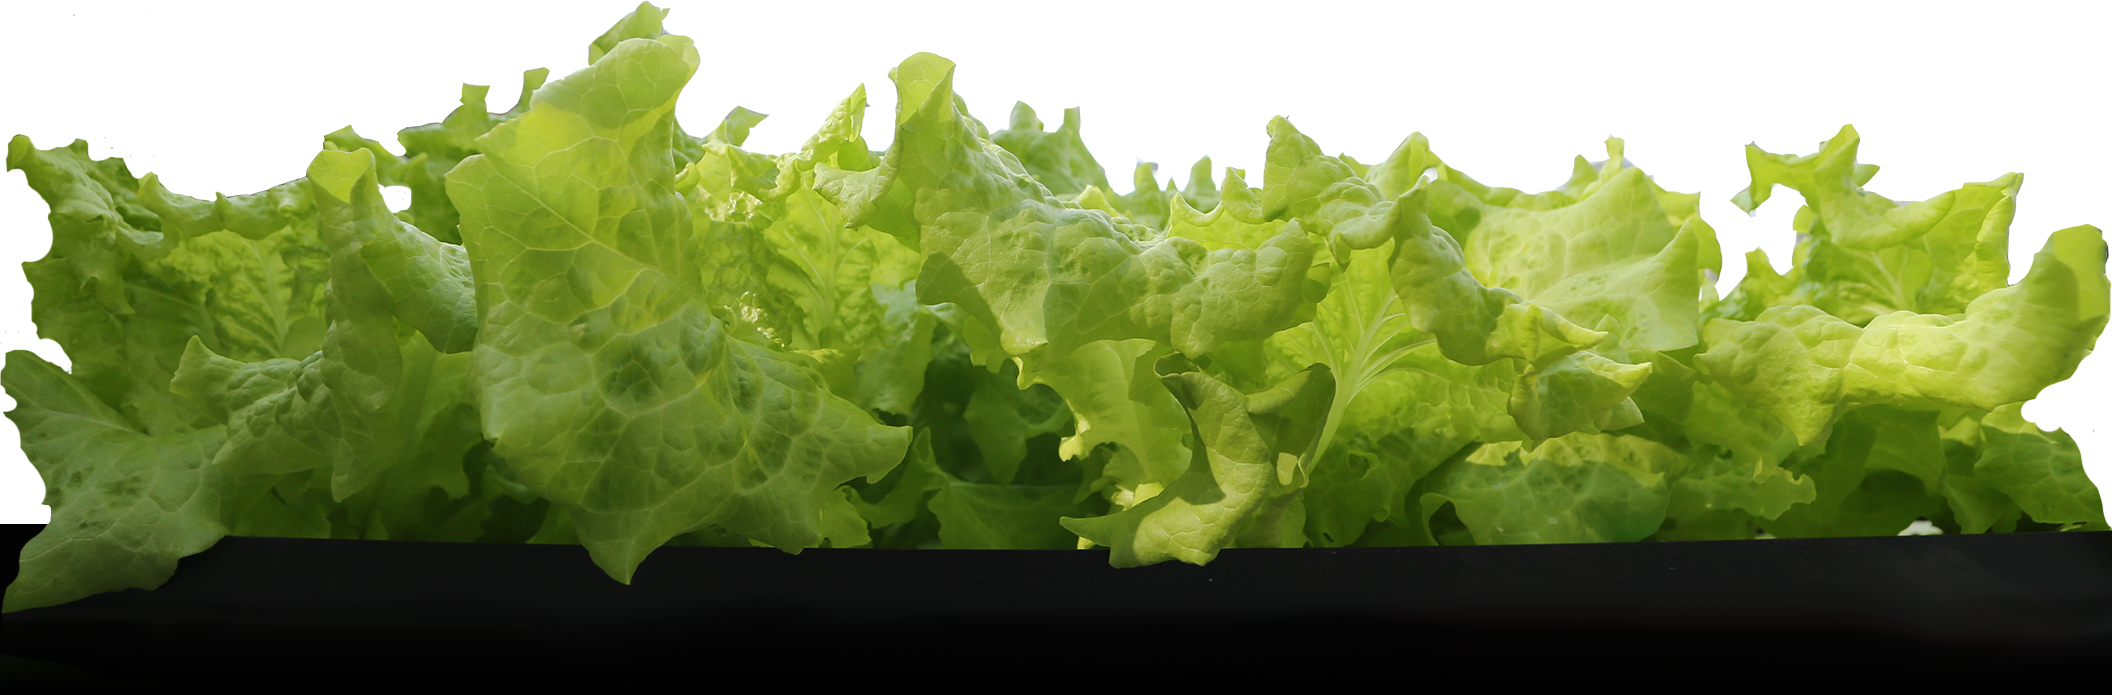 A row of leaf lettuce